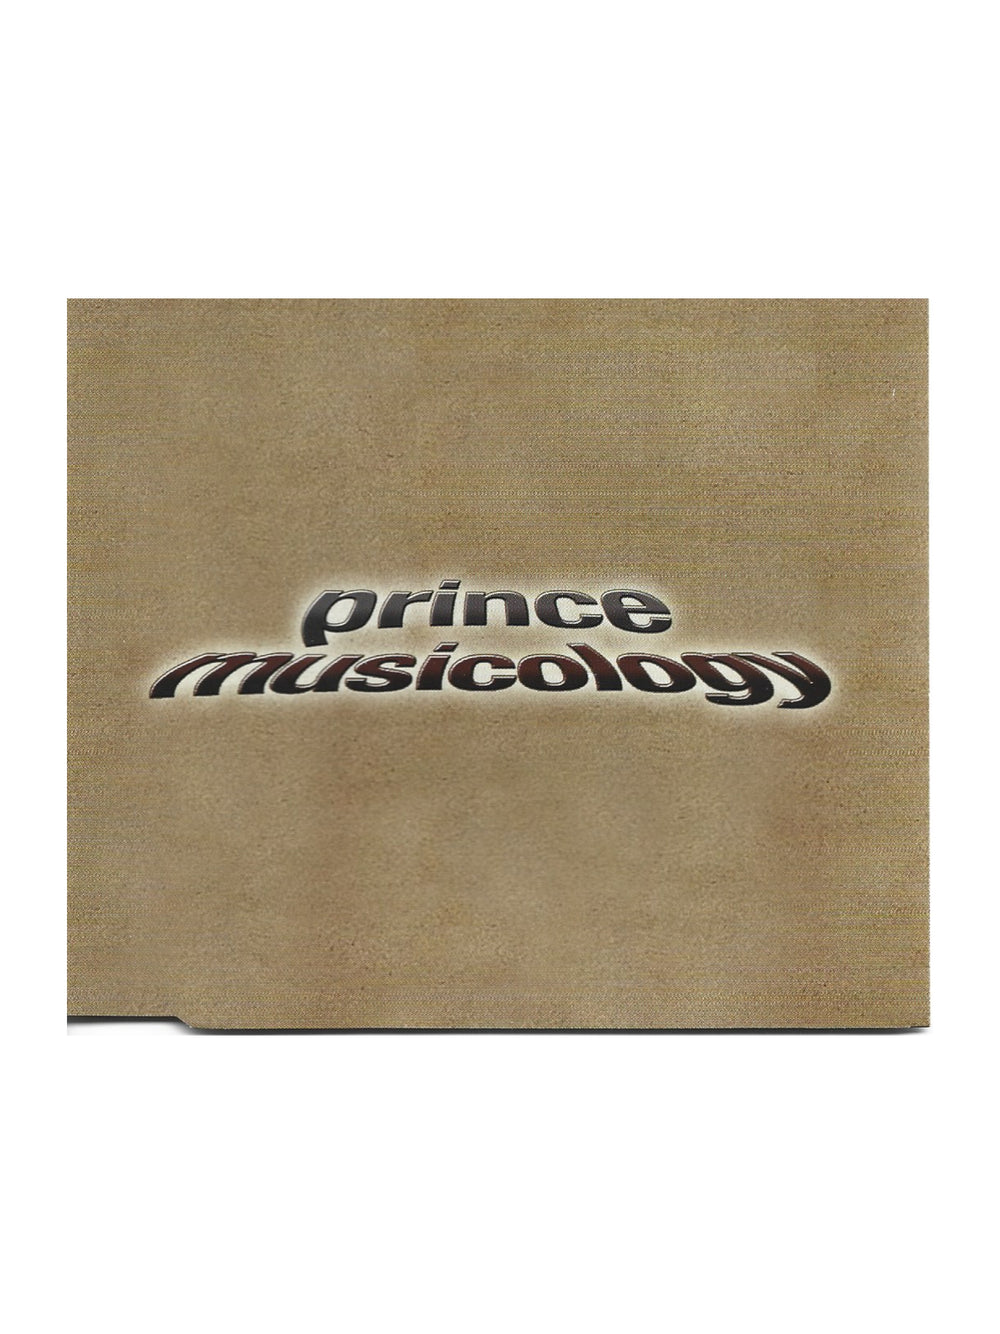 Prince – Musicology CD Single Promo EU Preloved: 2004